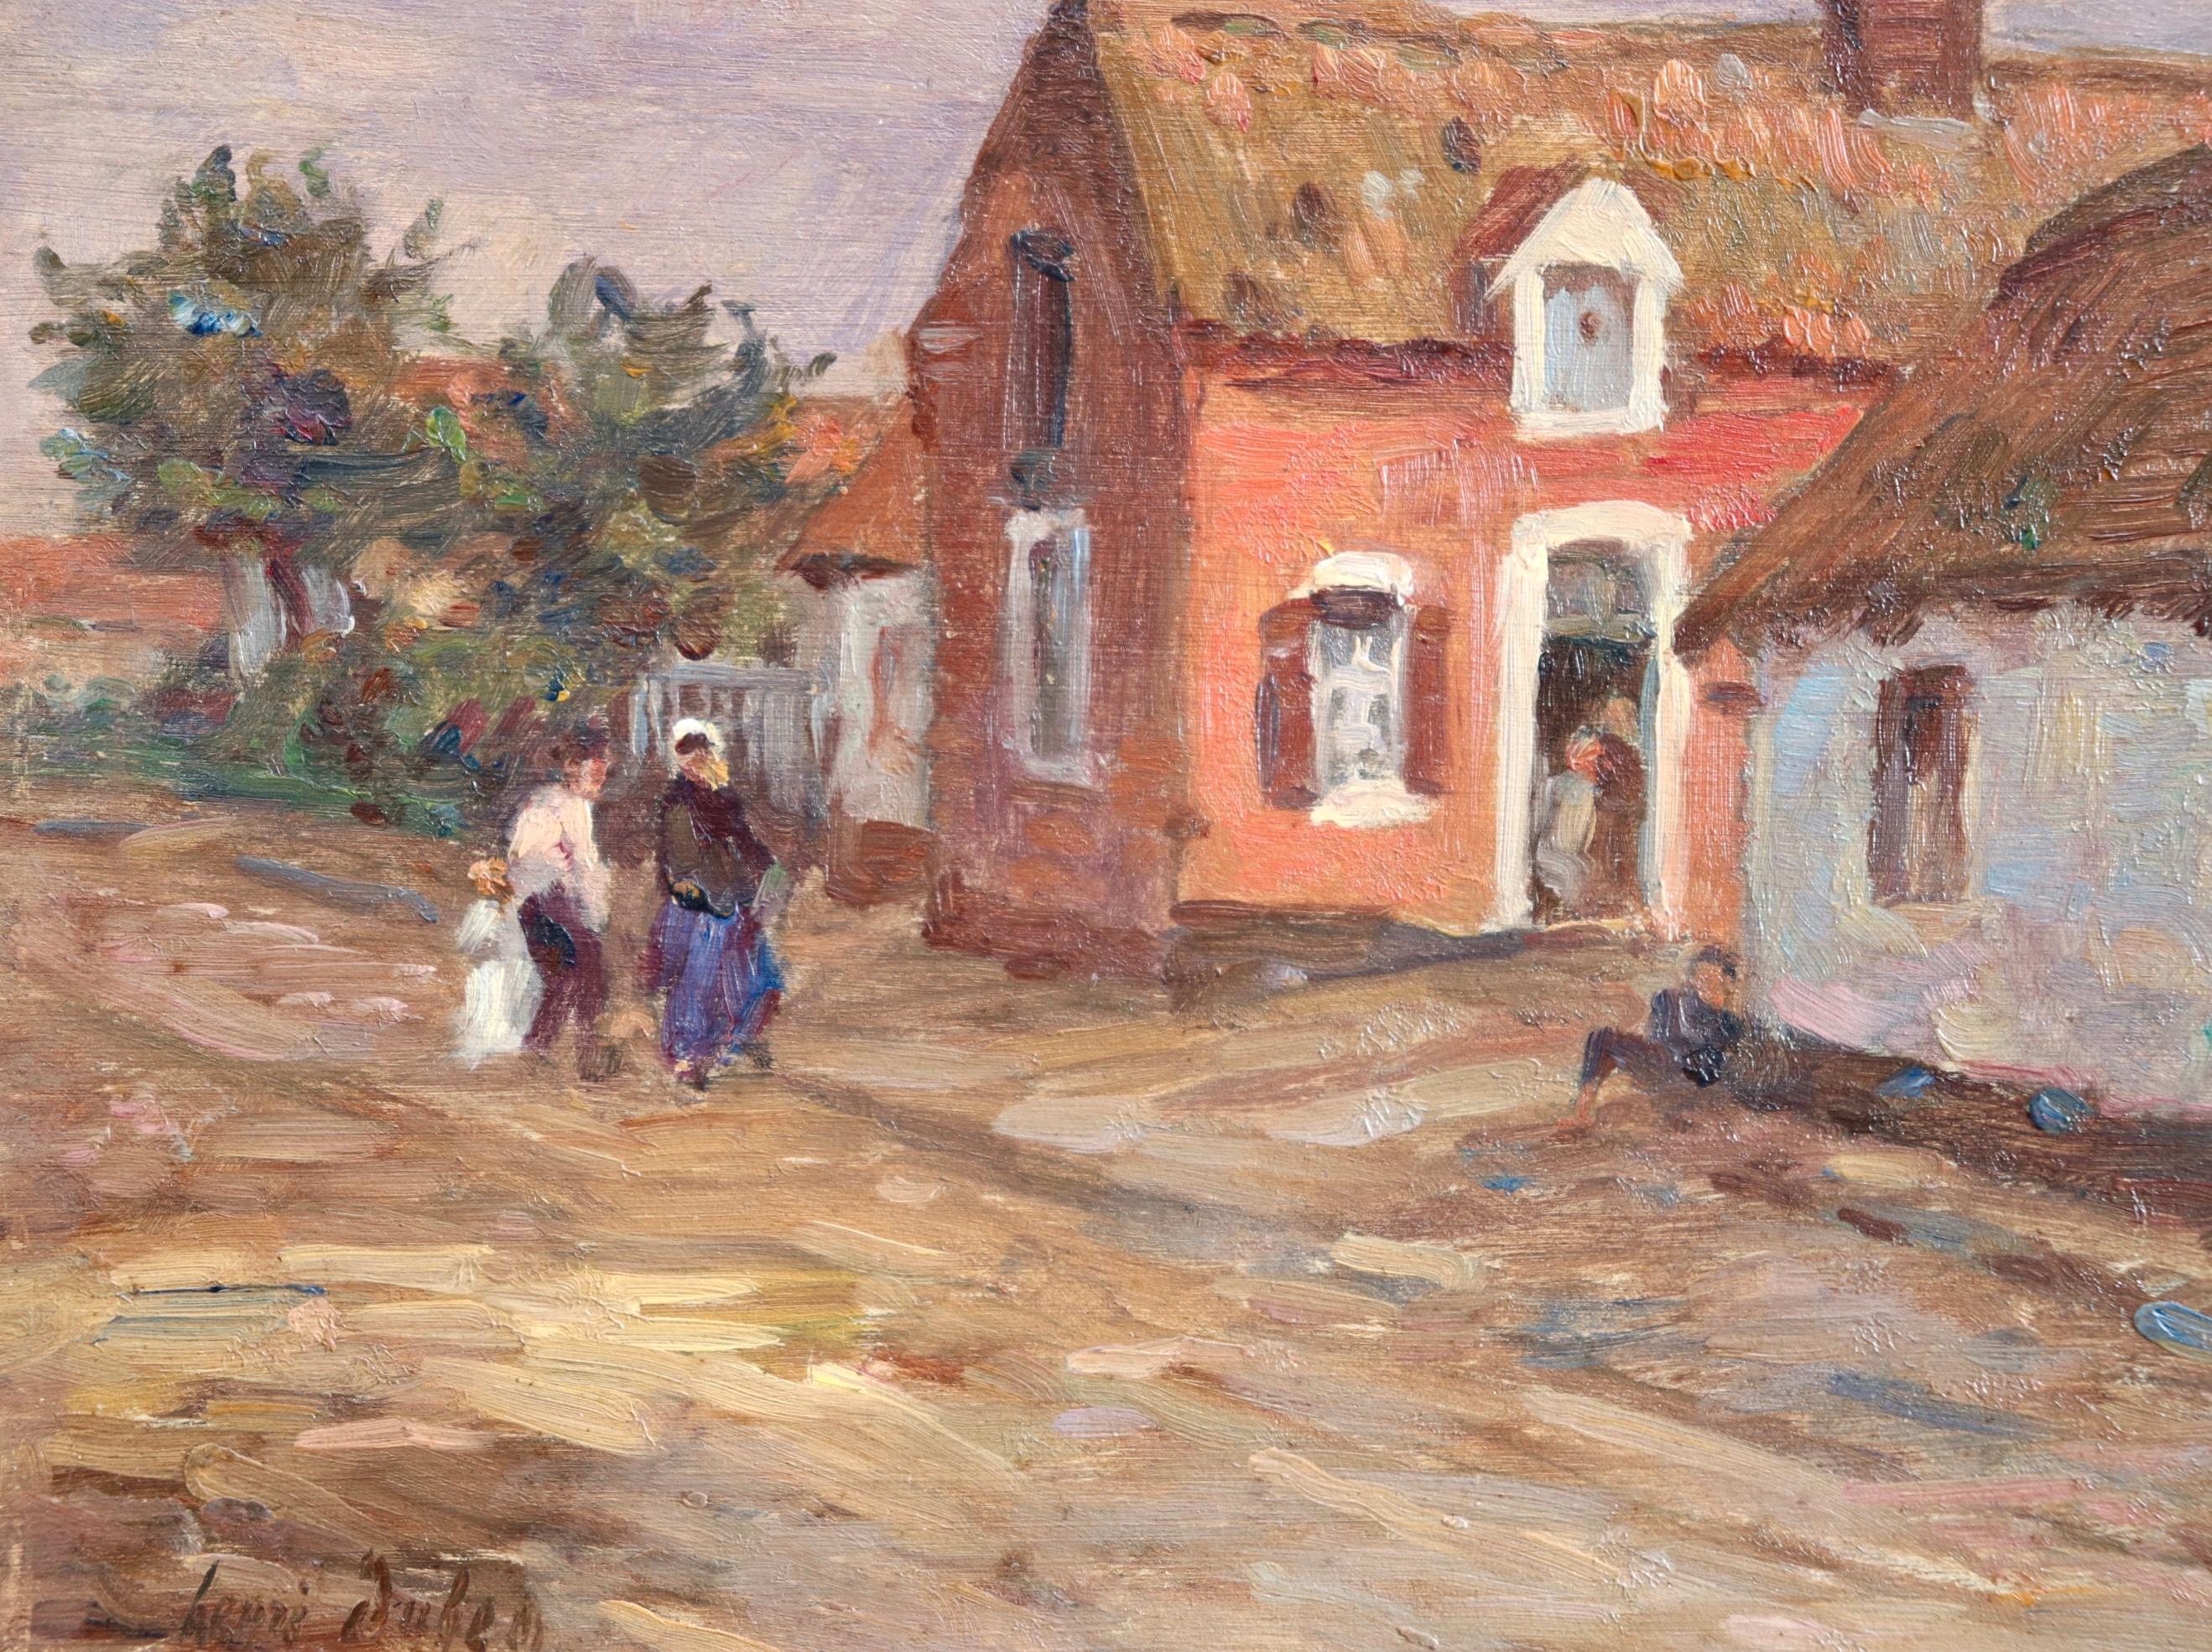 Famille au village - French Impressionist Oil, Figures in Landscape by H Duhem - Brown Figurative Painting by Henri Duhem